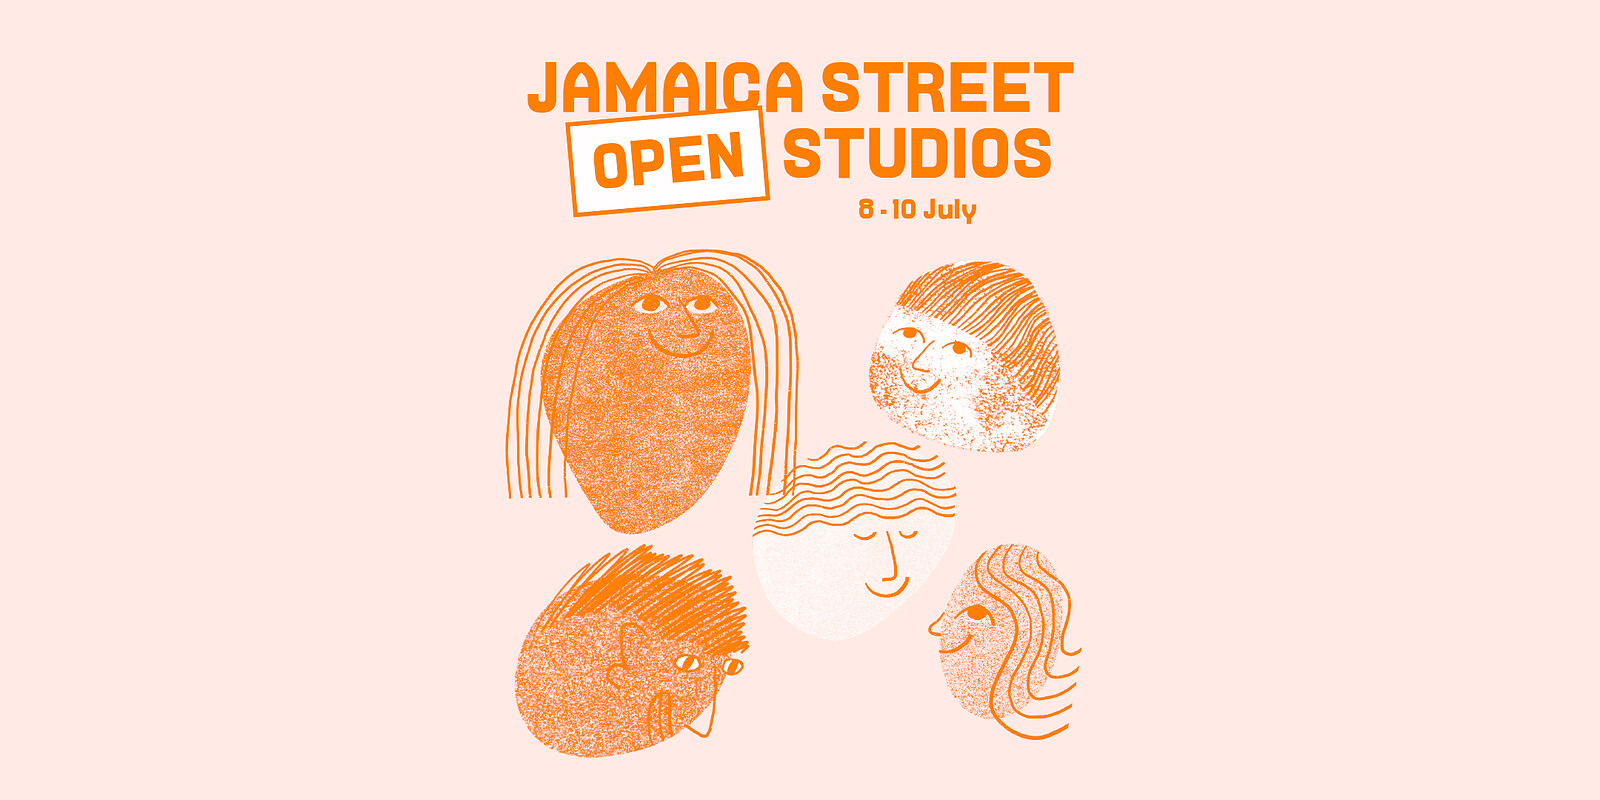 Open Studios - Saturday at Jamaica Street Studios